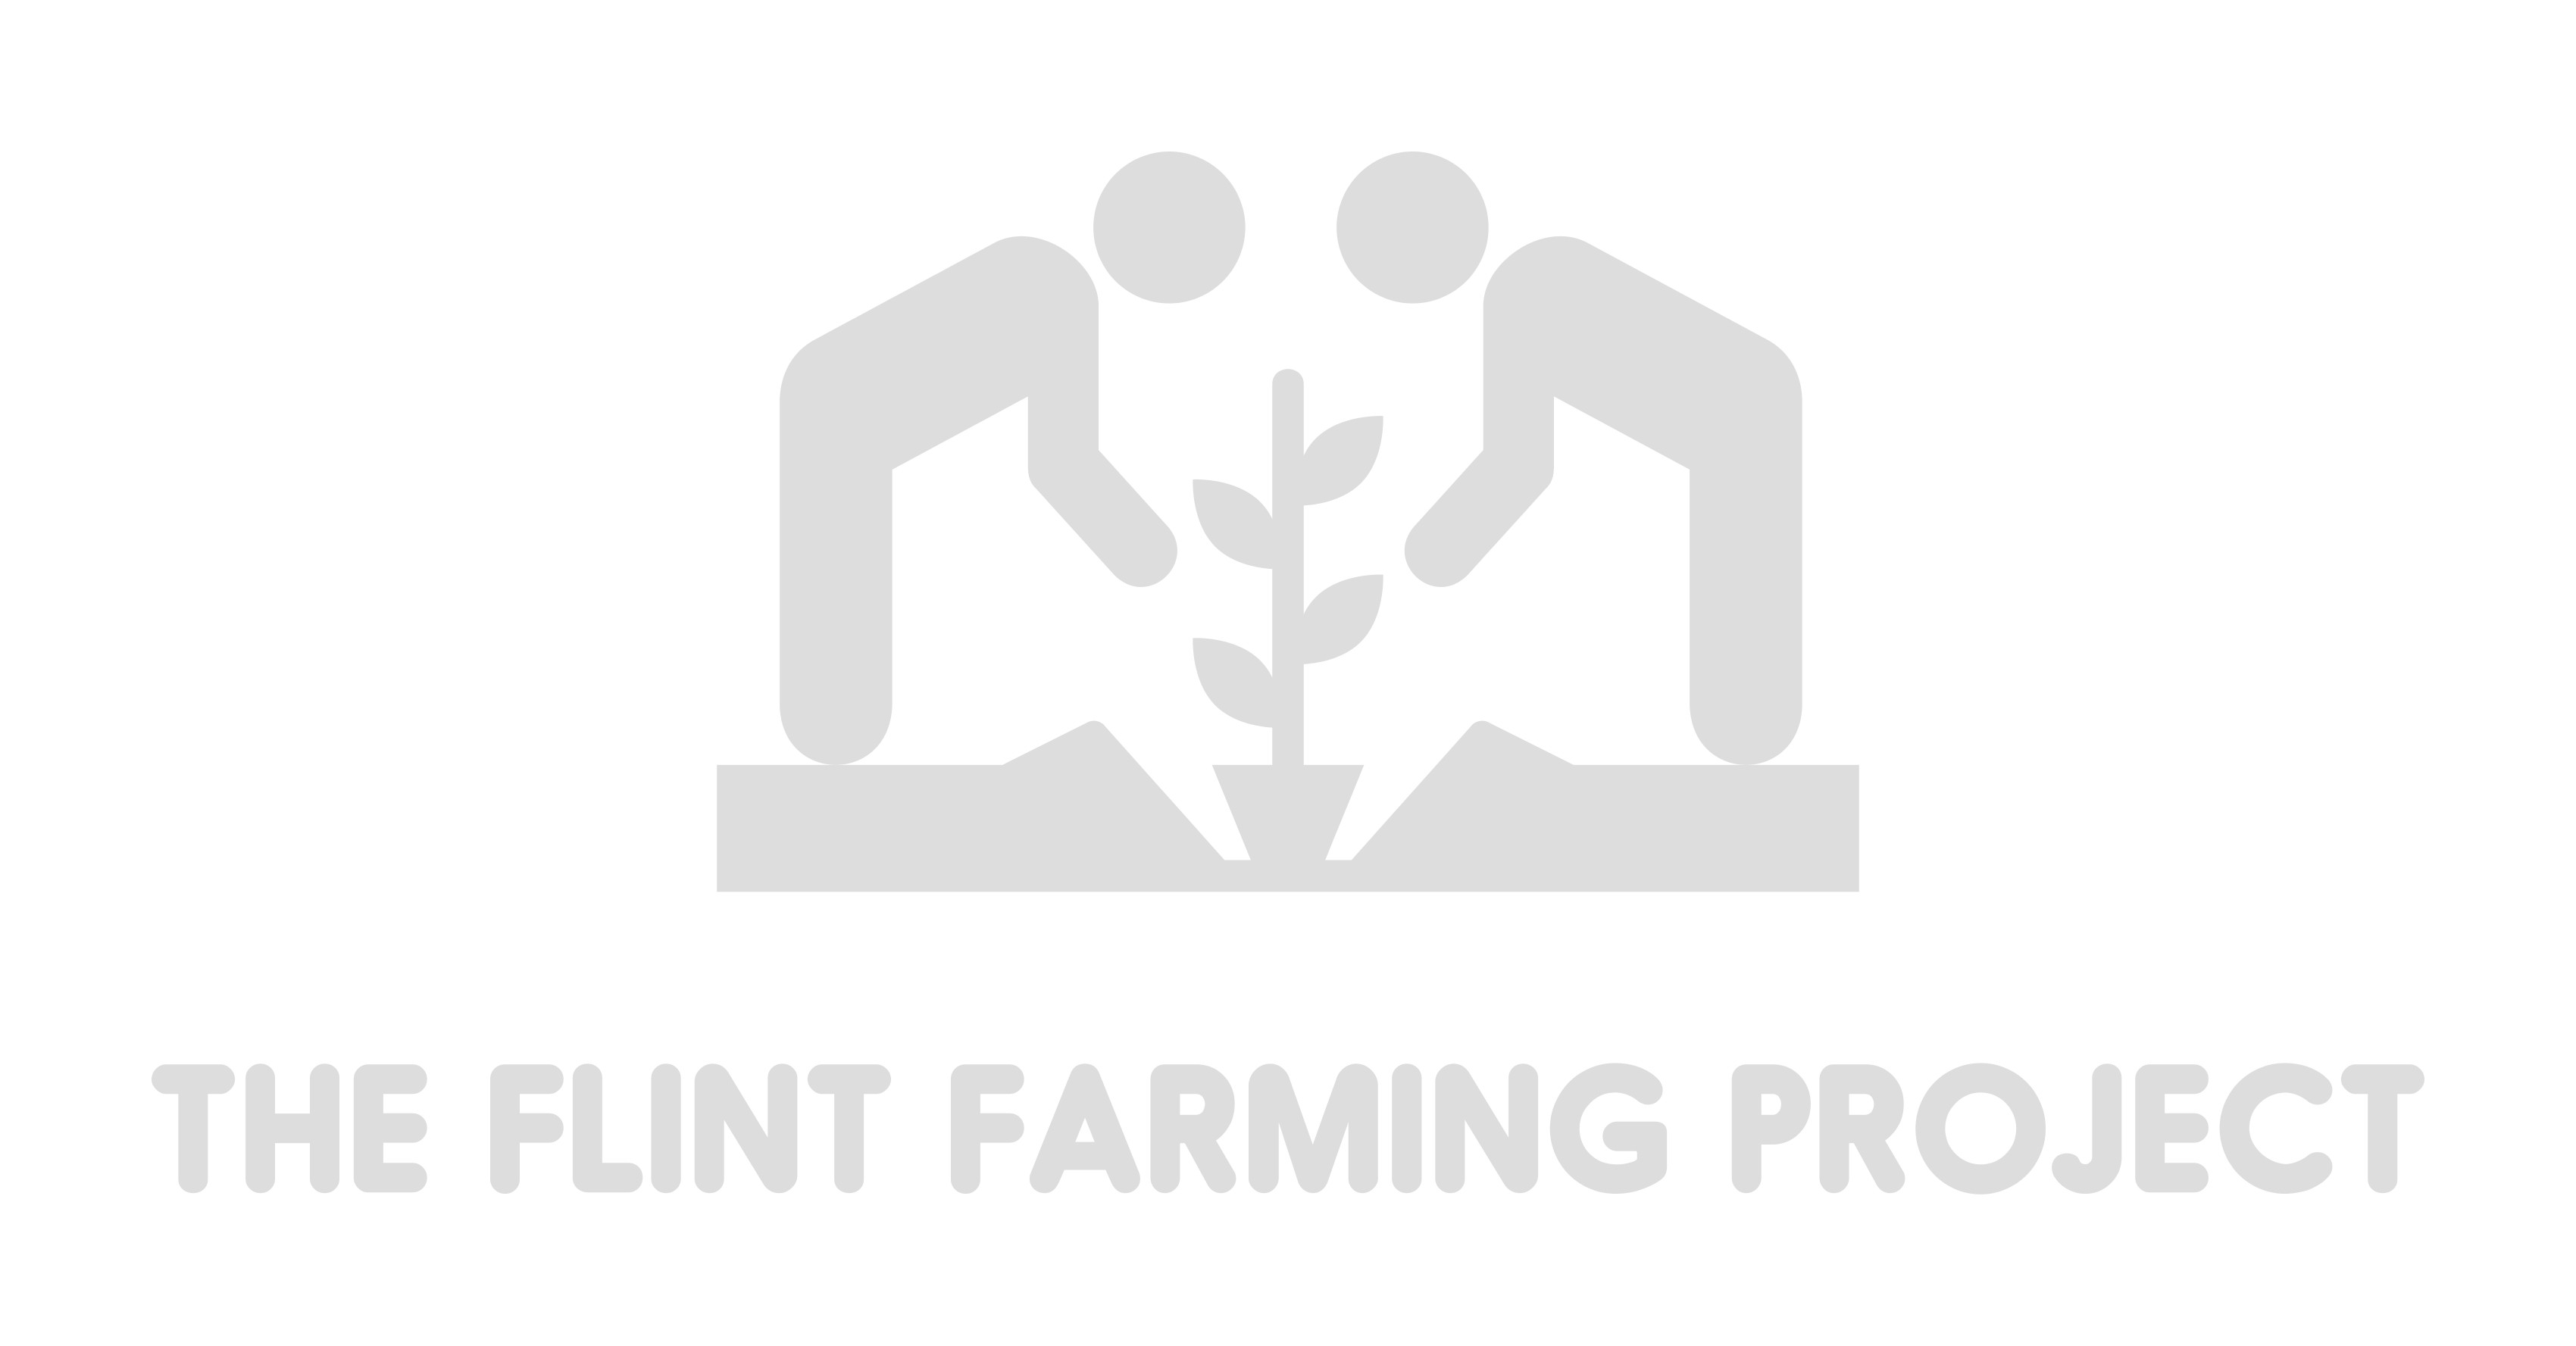 The Flint Farming Project